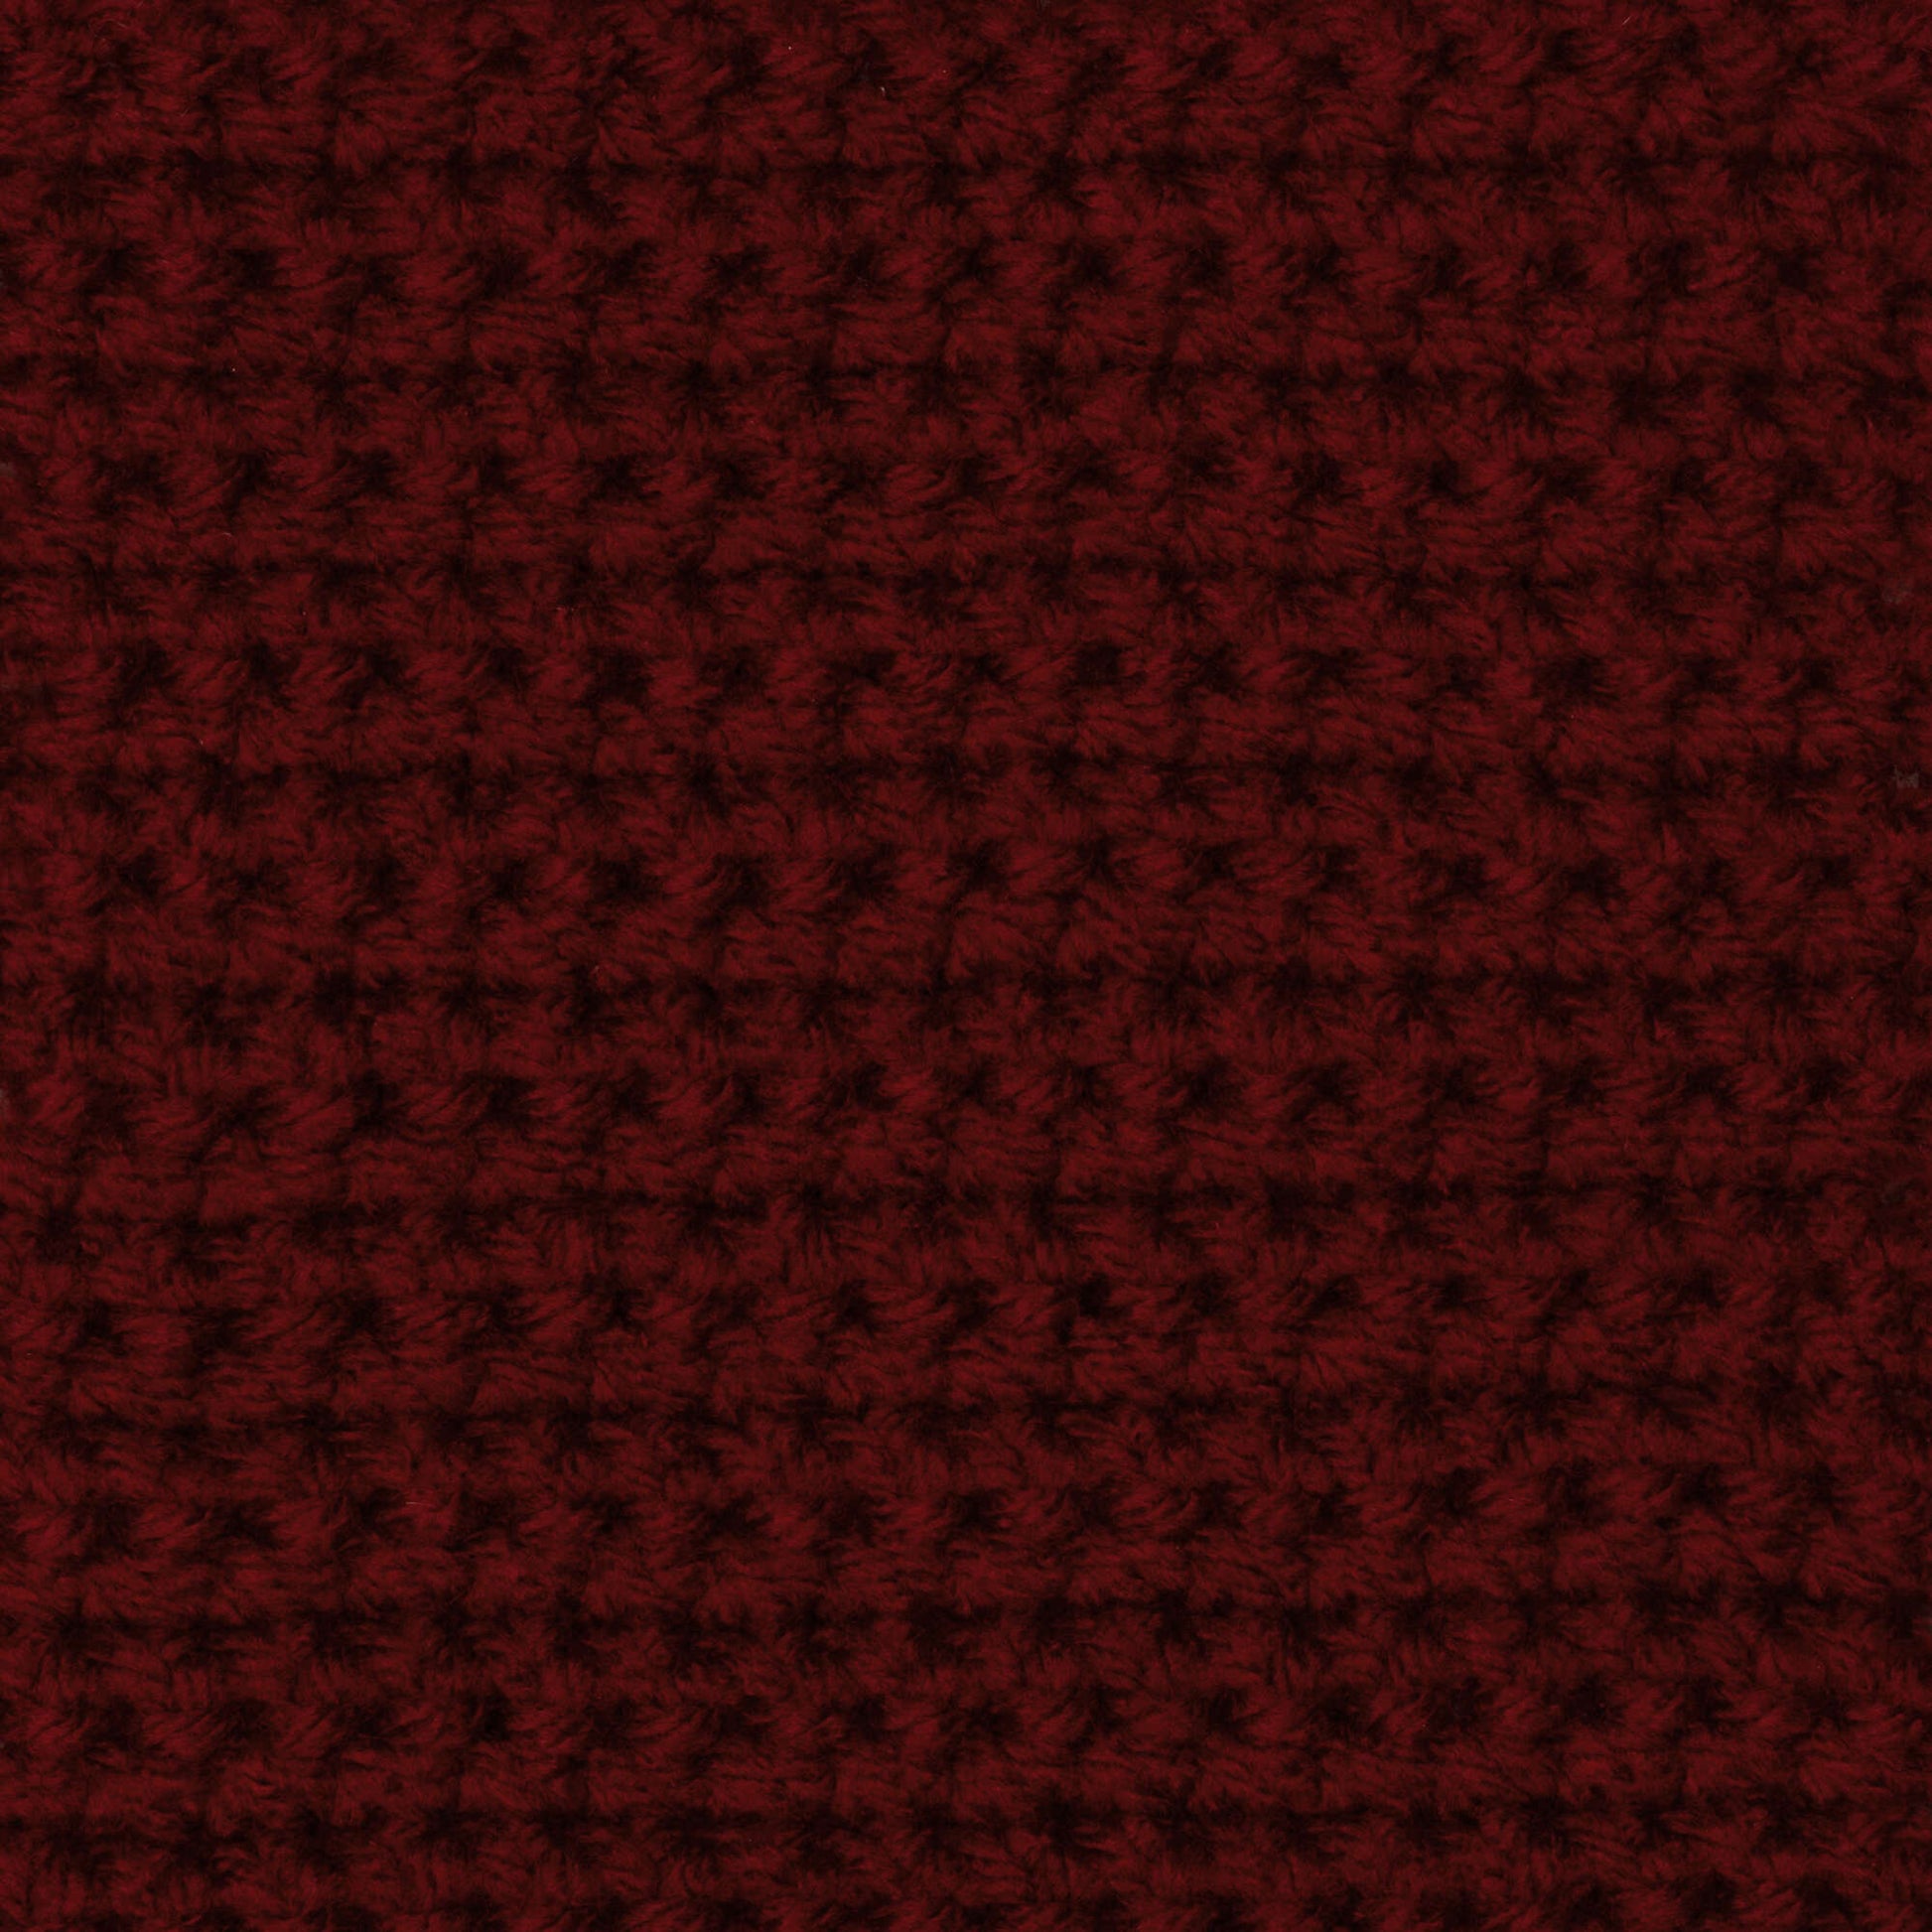 Red Heart with Love Jadeite Yarn - 3 Pack of 198g/7oz - Acrylic - 4 Medium  (Worsted) - 370 Yards - Knitting/Crochet